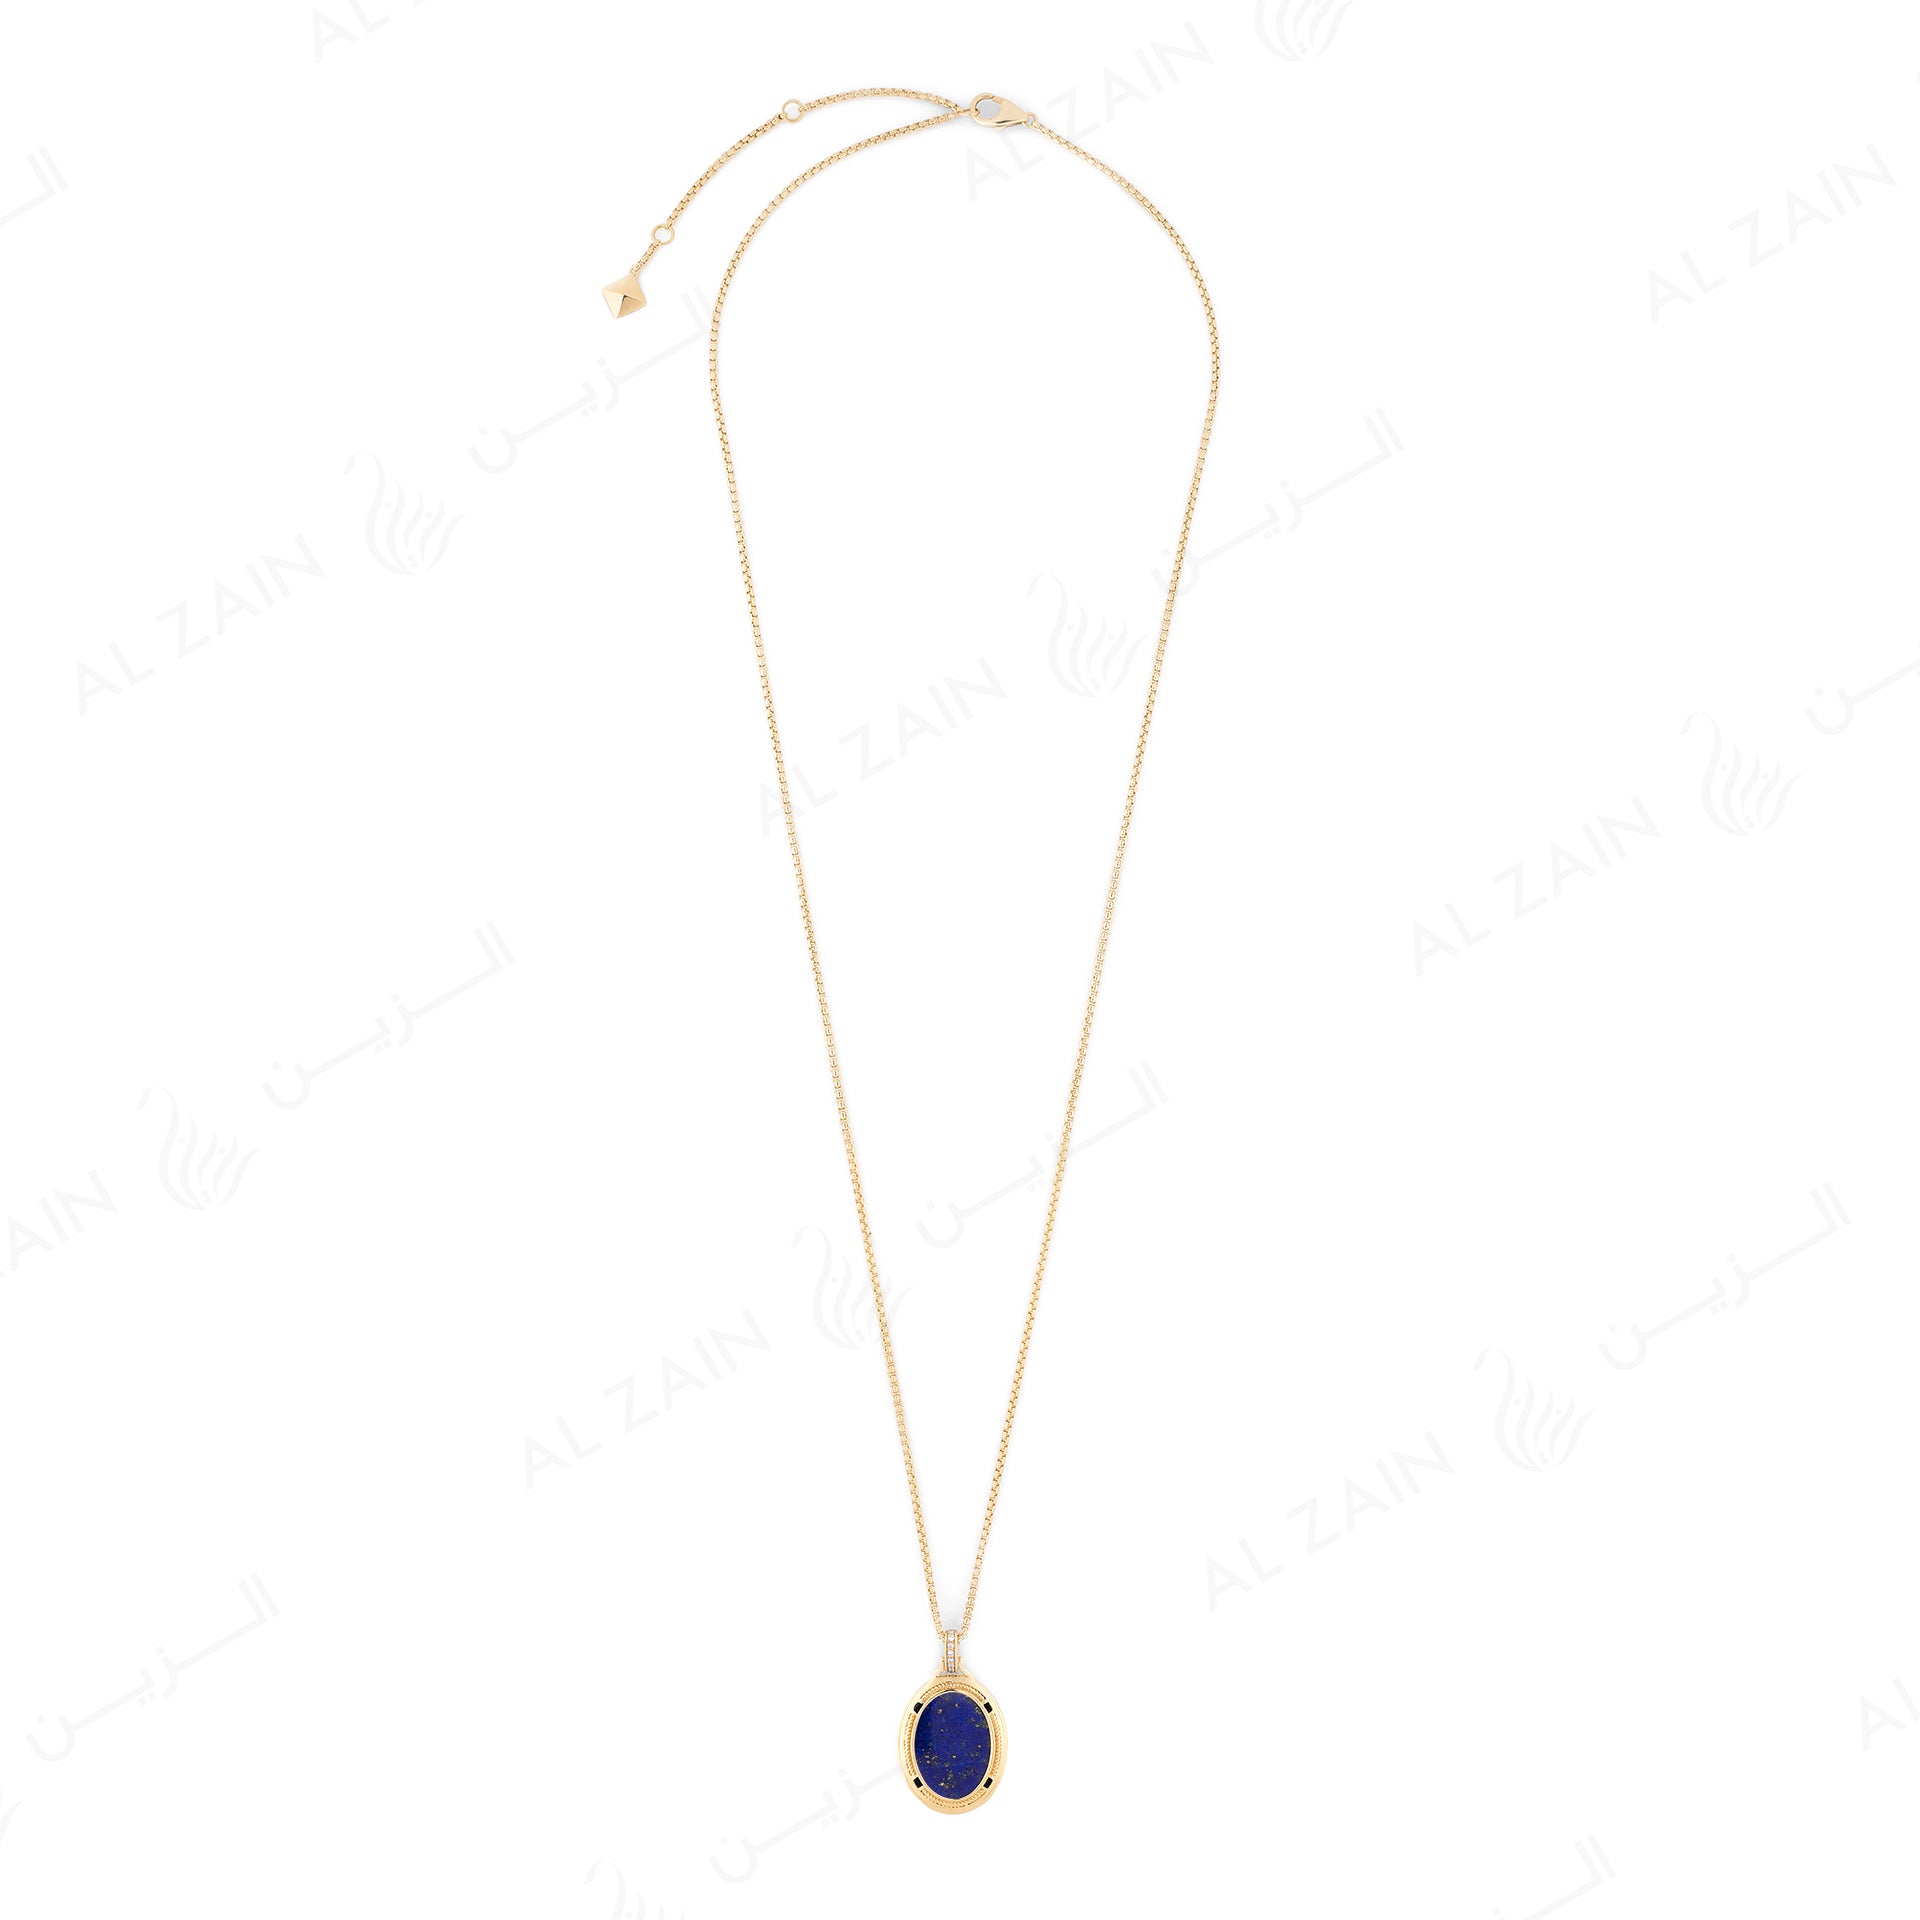 Ayat Al Kursi Necklace in Yellow Gold with Lapis Lazuli